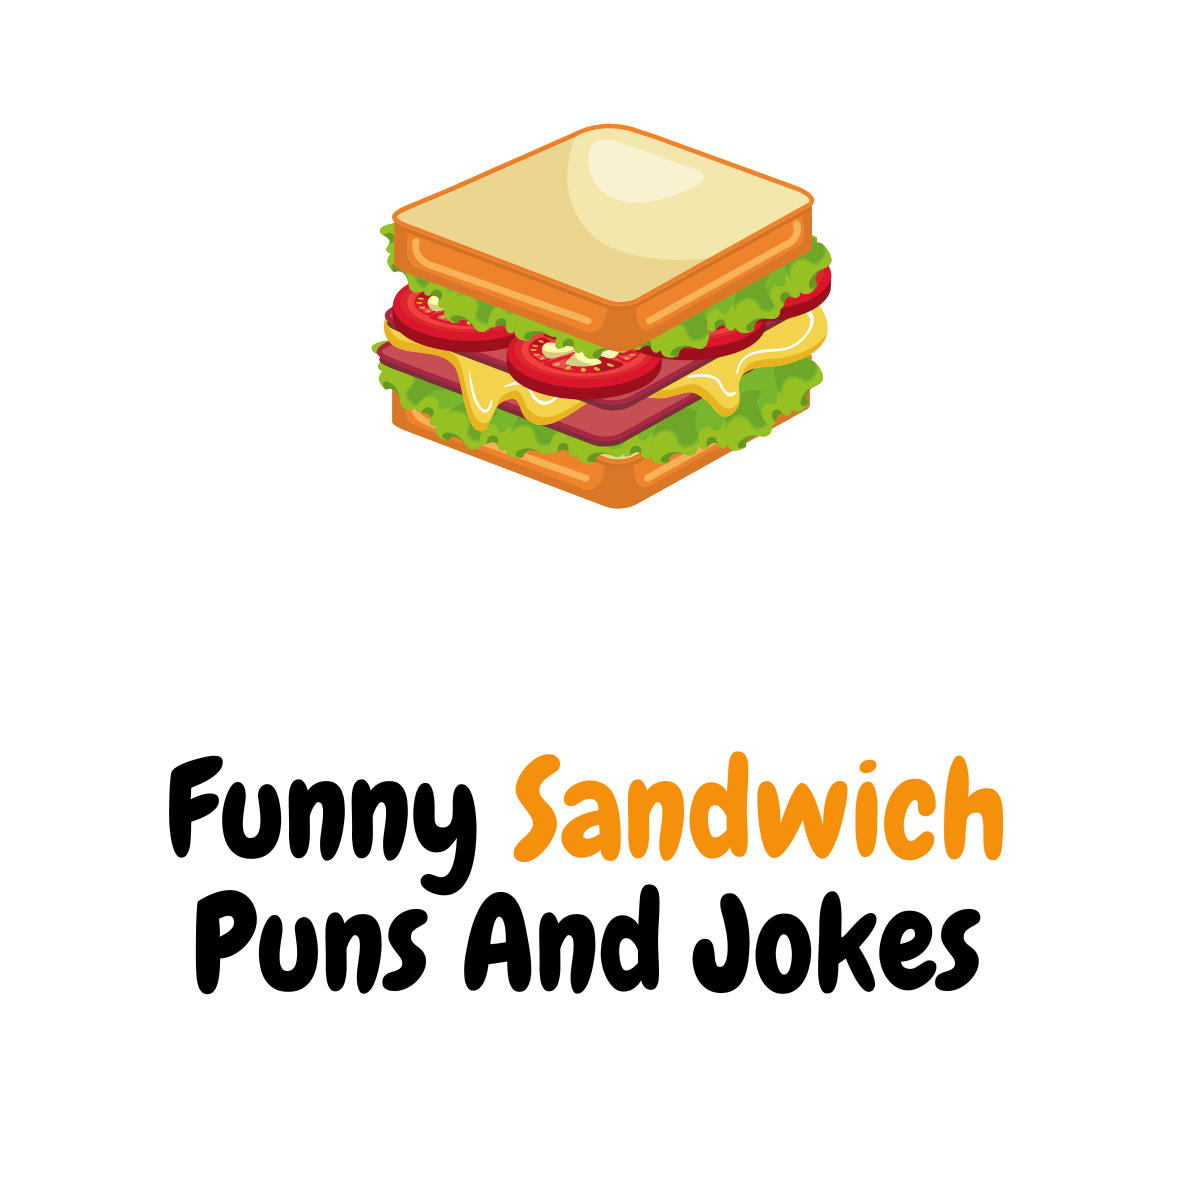 Funny Sandwich puns and jokes